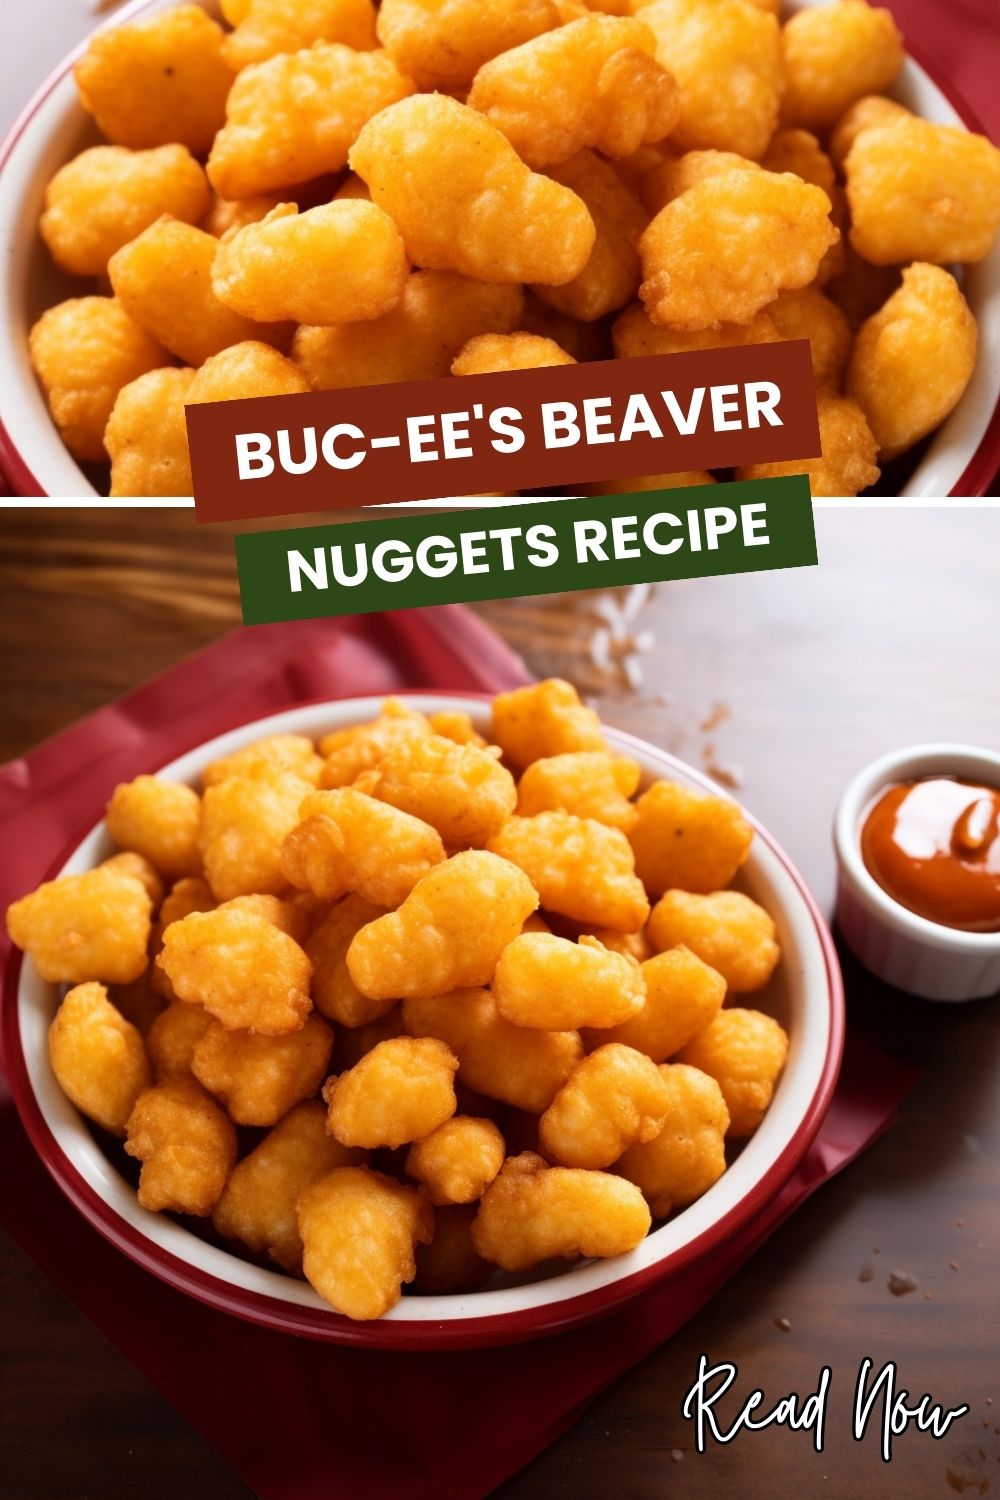 Buc-ee's Beaver Nuggets Recipe